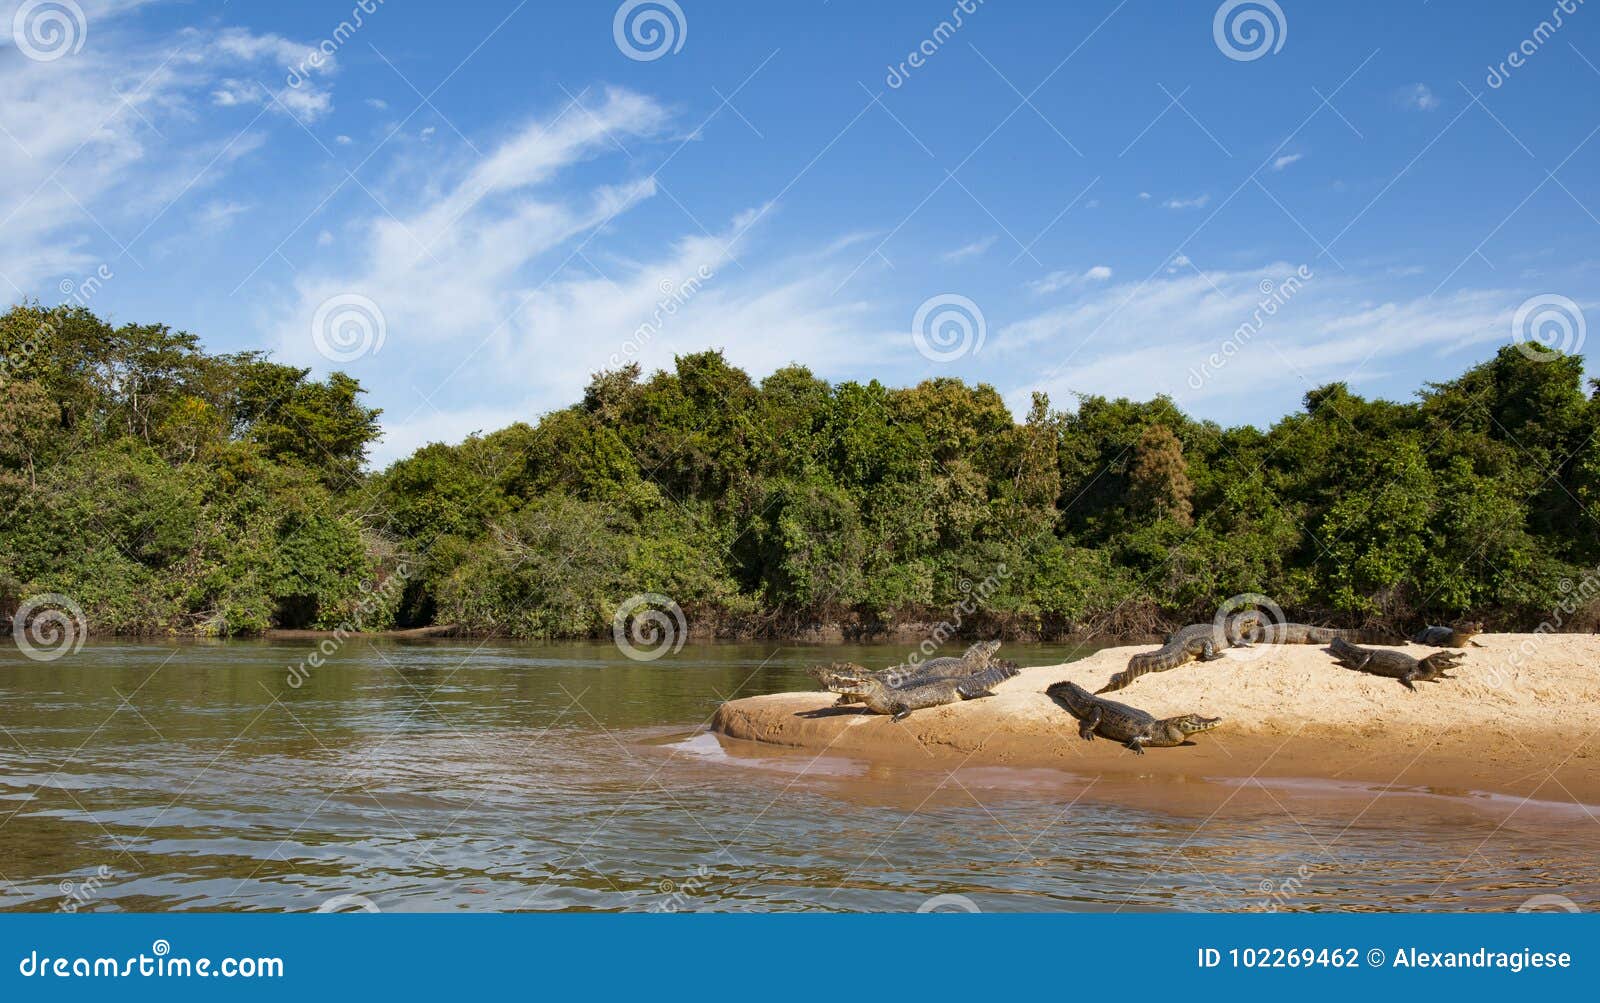 crocodiles sunbathing on the shore of the cuiaba river